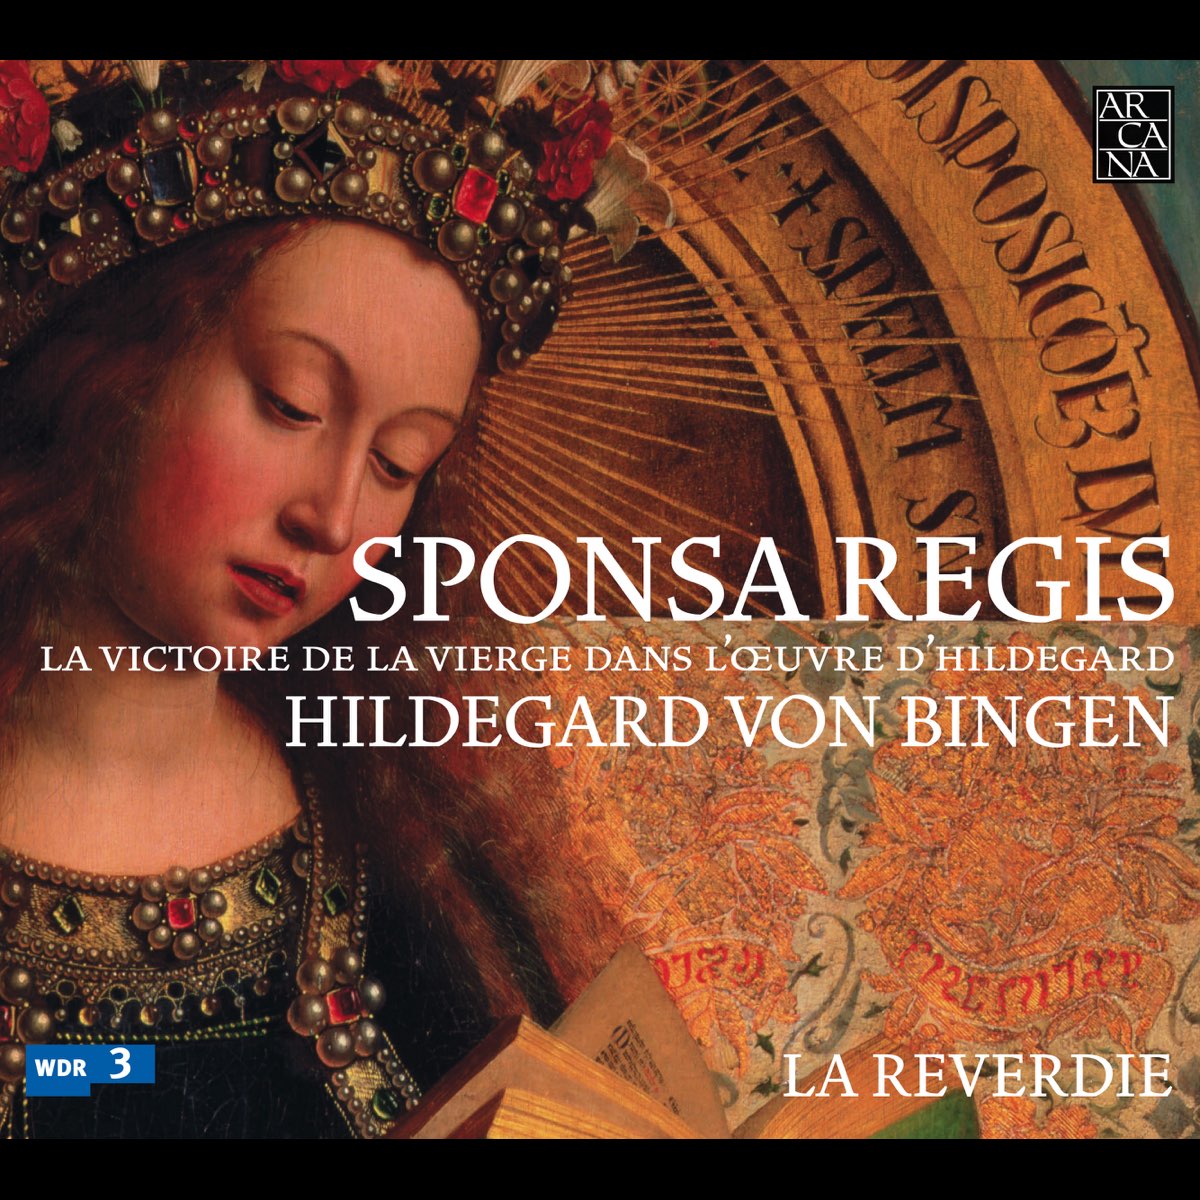 La Reverdie I Piccoli Cantori Di San Bortoloの Von Bingen Sponsa Regis La Victoire De La Vierge Dans L œuvre D Hildegard をapple Musicで